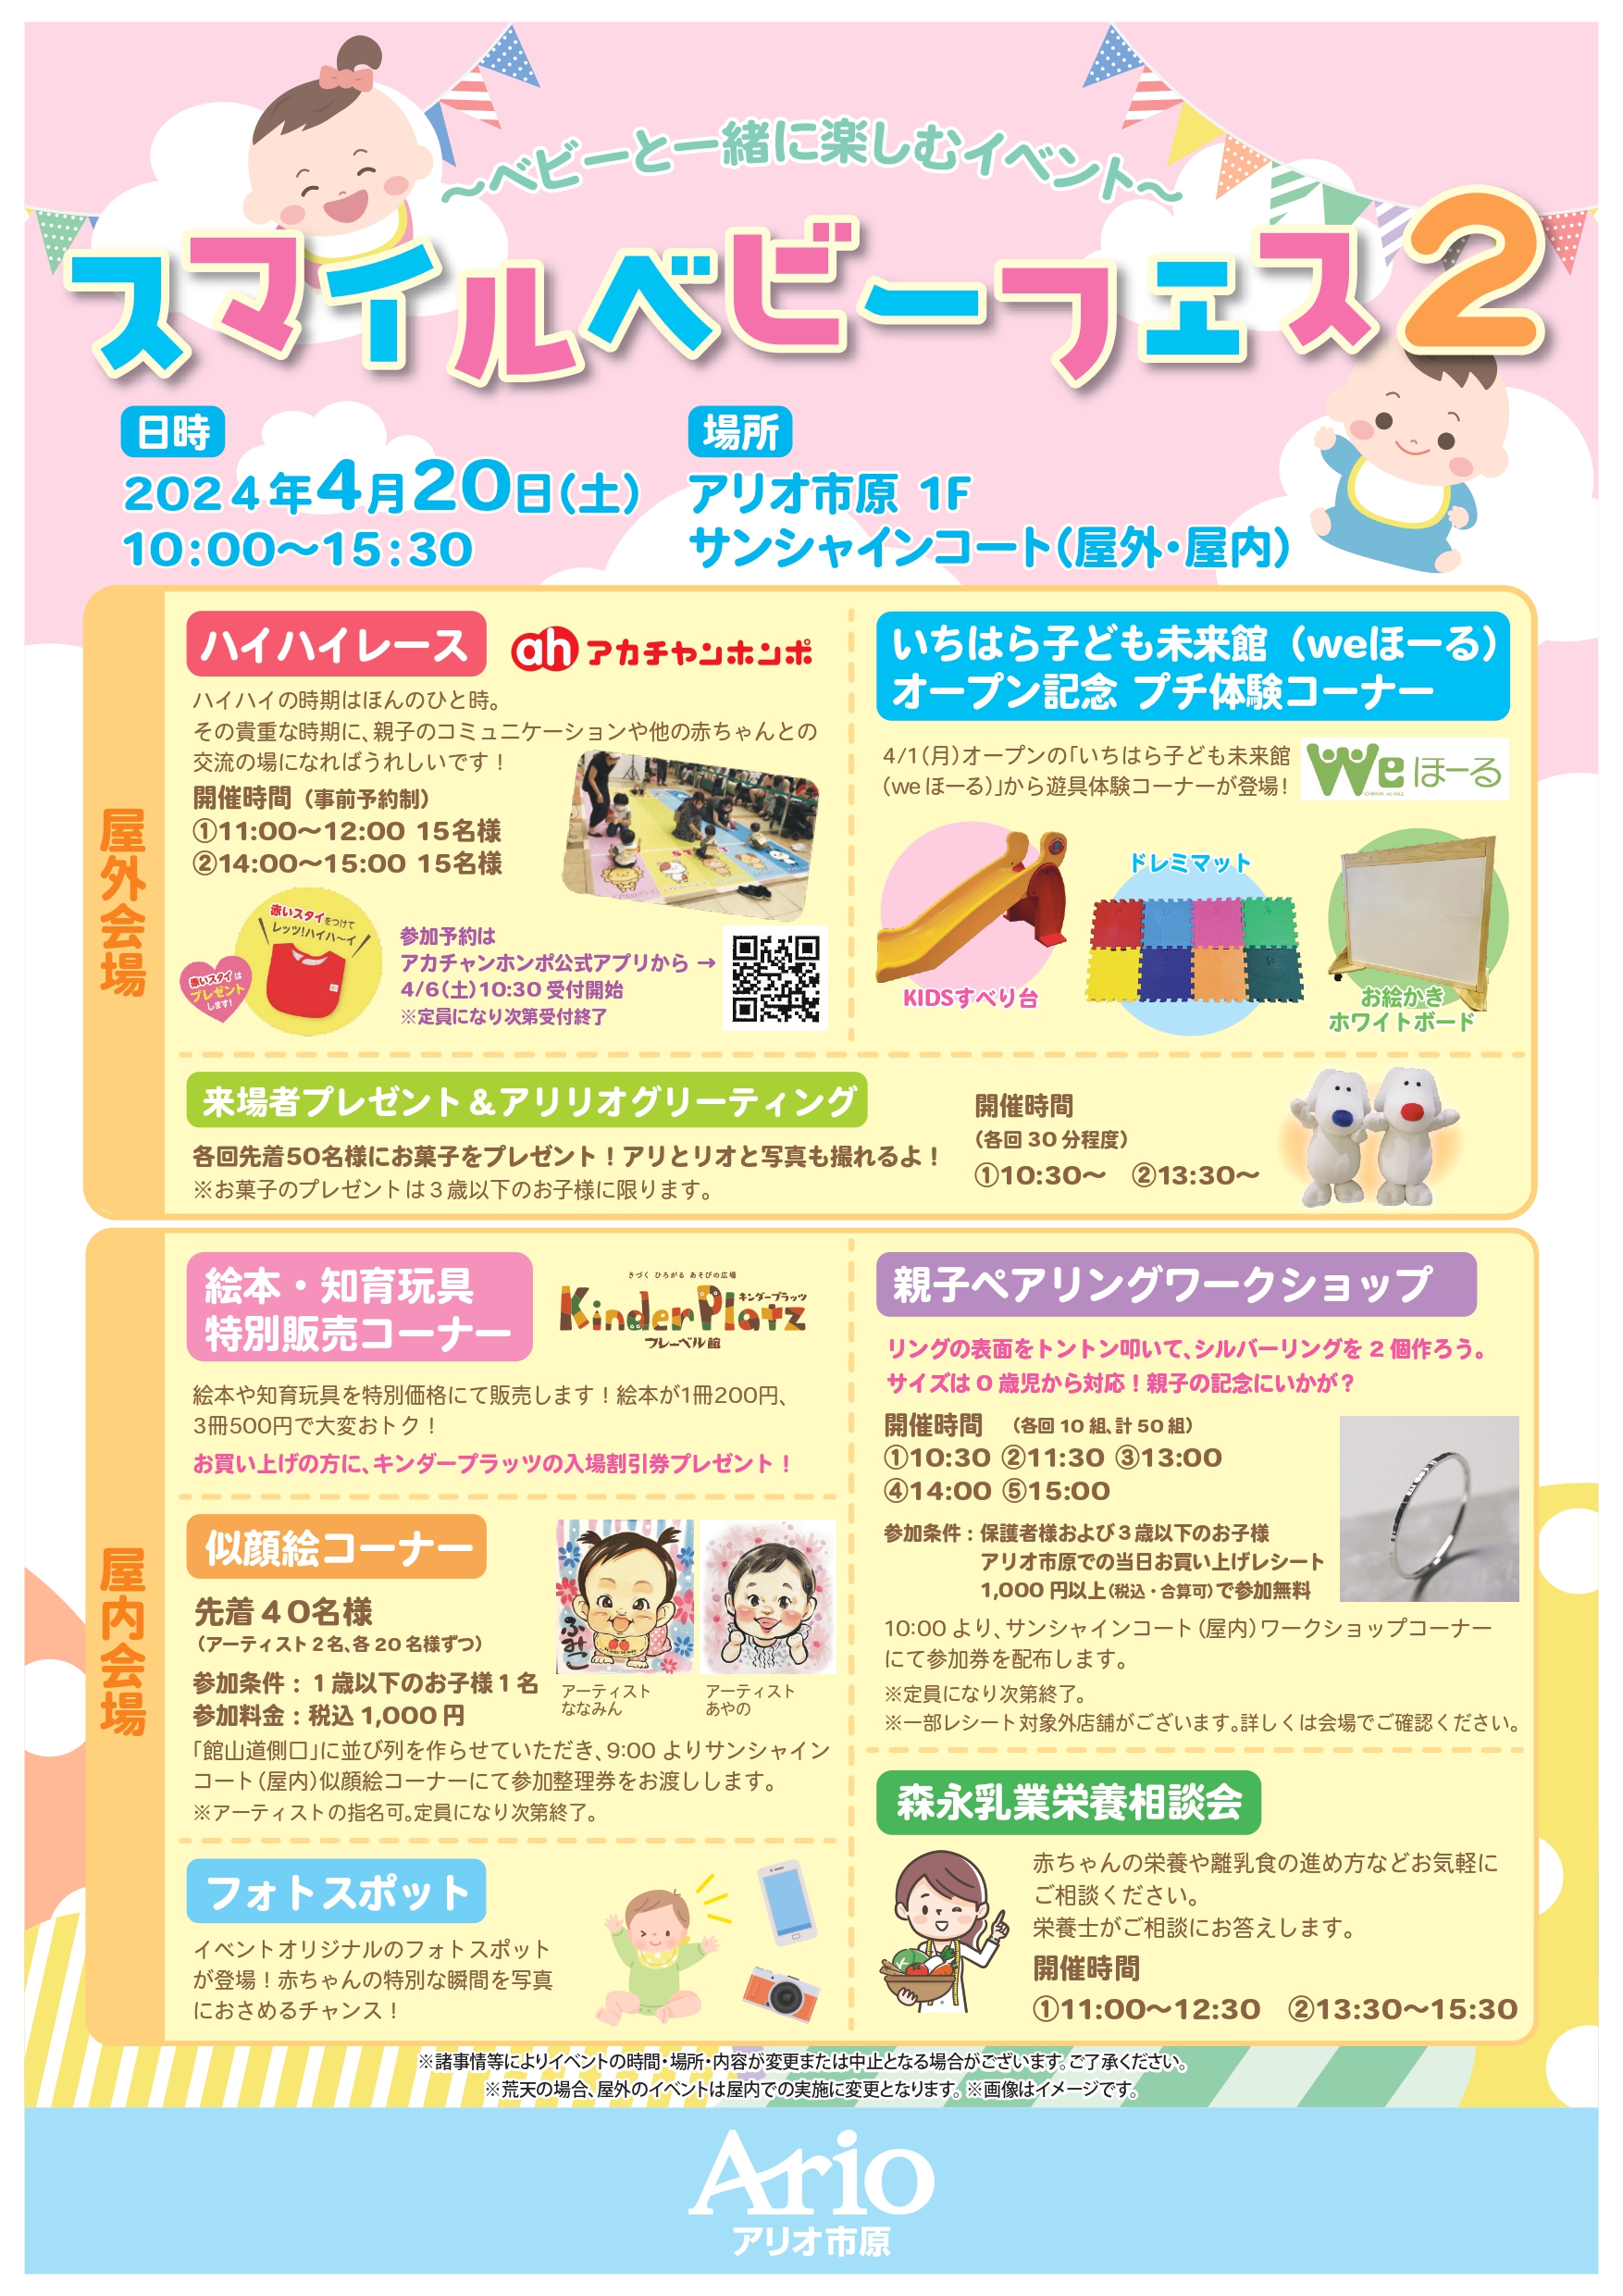 WeHOL participates in Ario Ichihara “Smile Baby Fest 2” ♪ “Commemorating the Opening of Ichihara Children’s Miraikan (weHOL) Petit Experience Corner”.